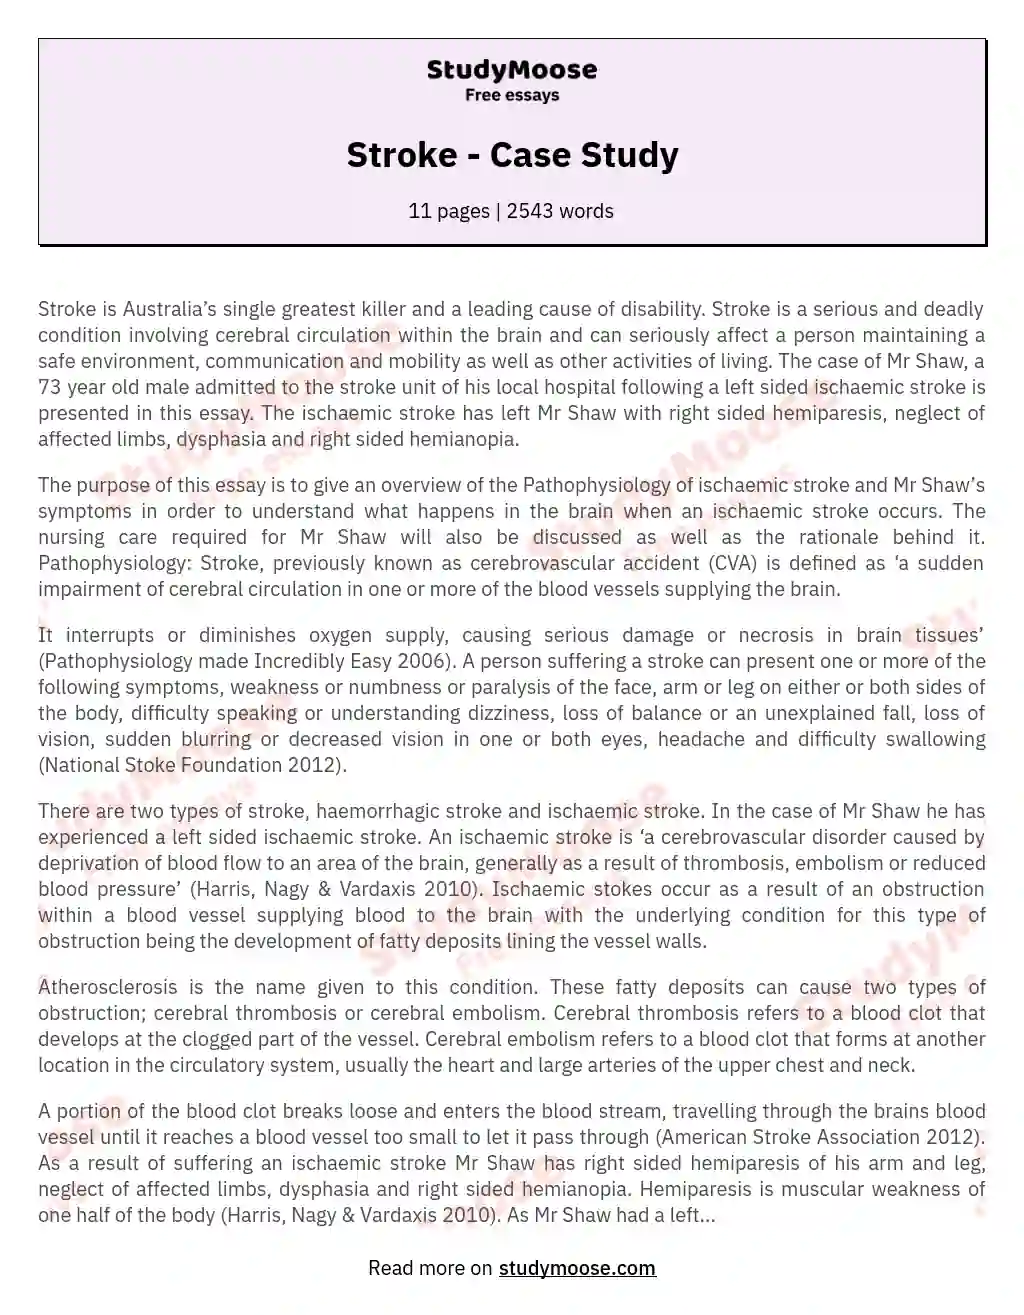 stroke case study essay